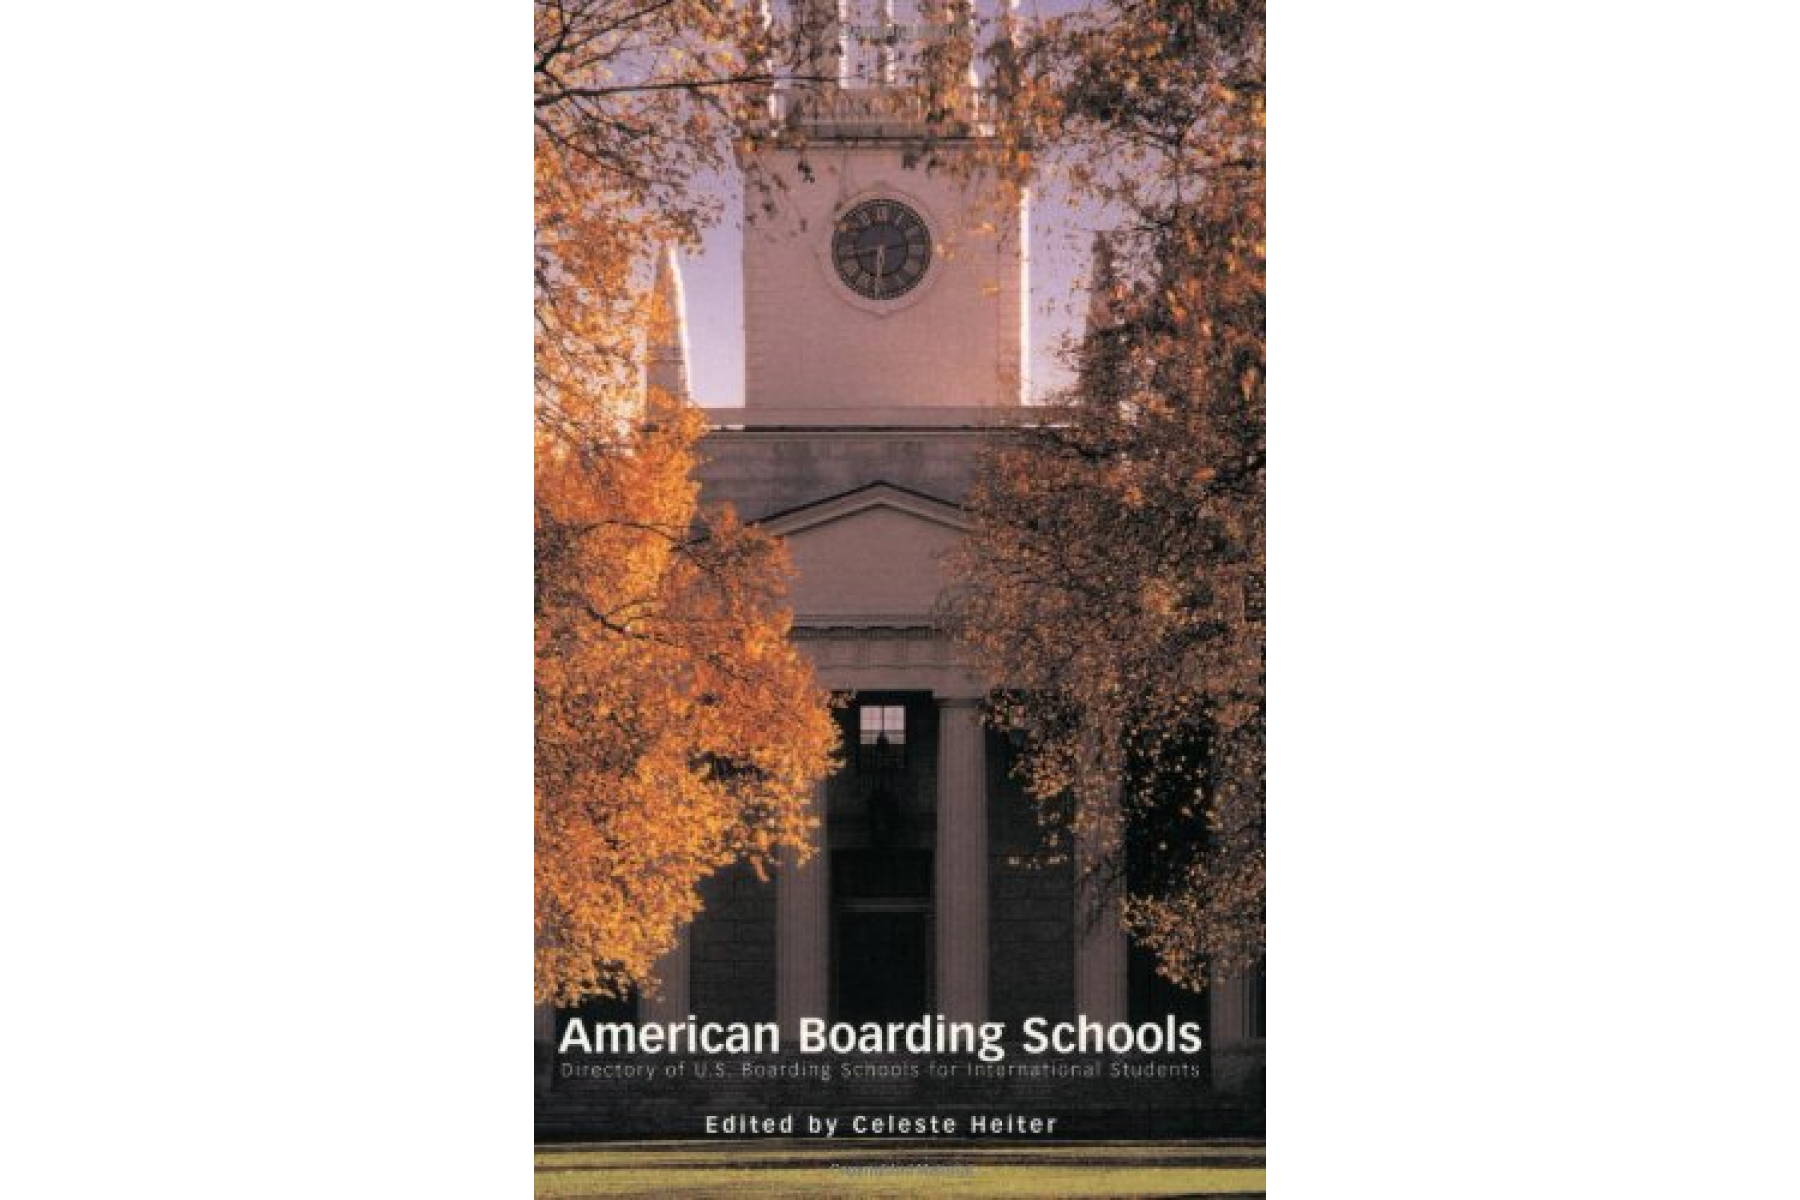 American Boarding Schools: Directory of U.S. Boarding Schools for International Students